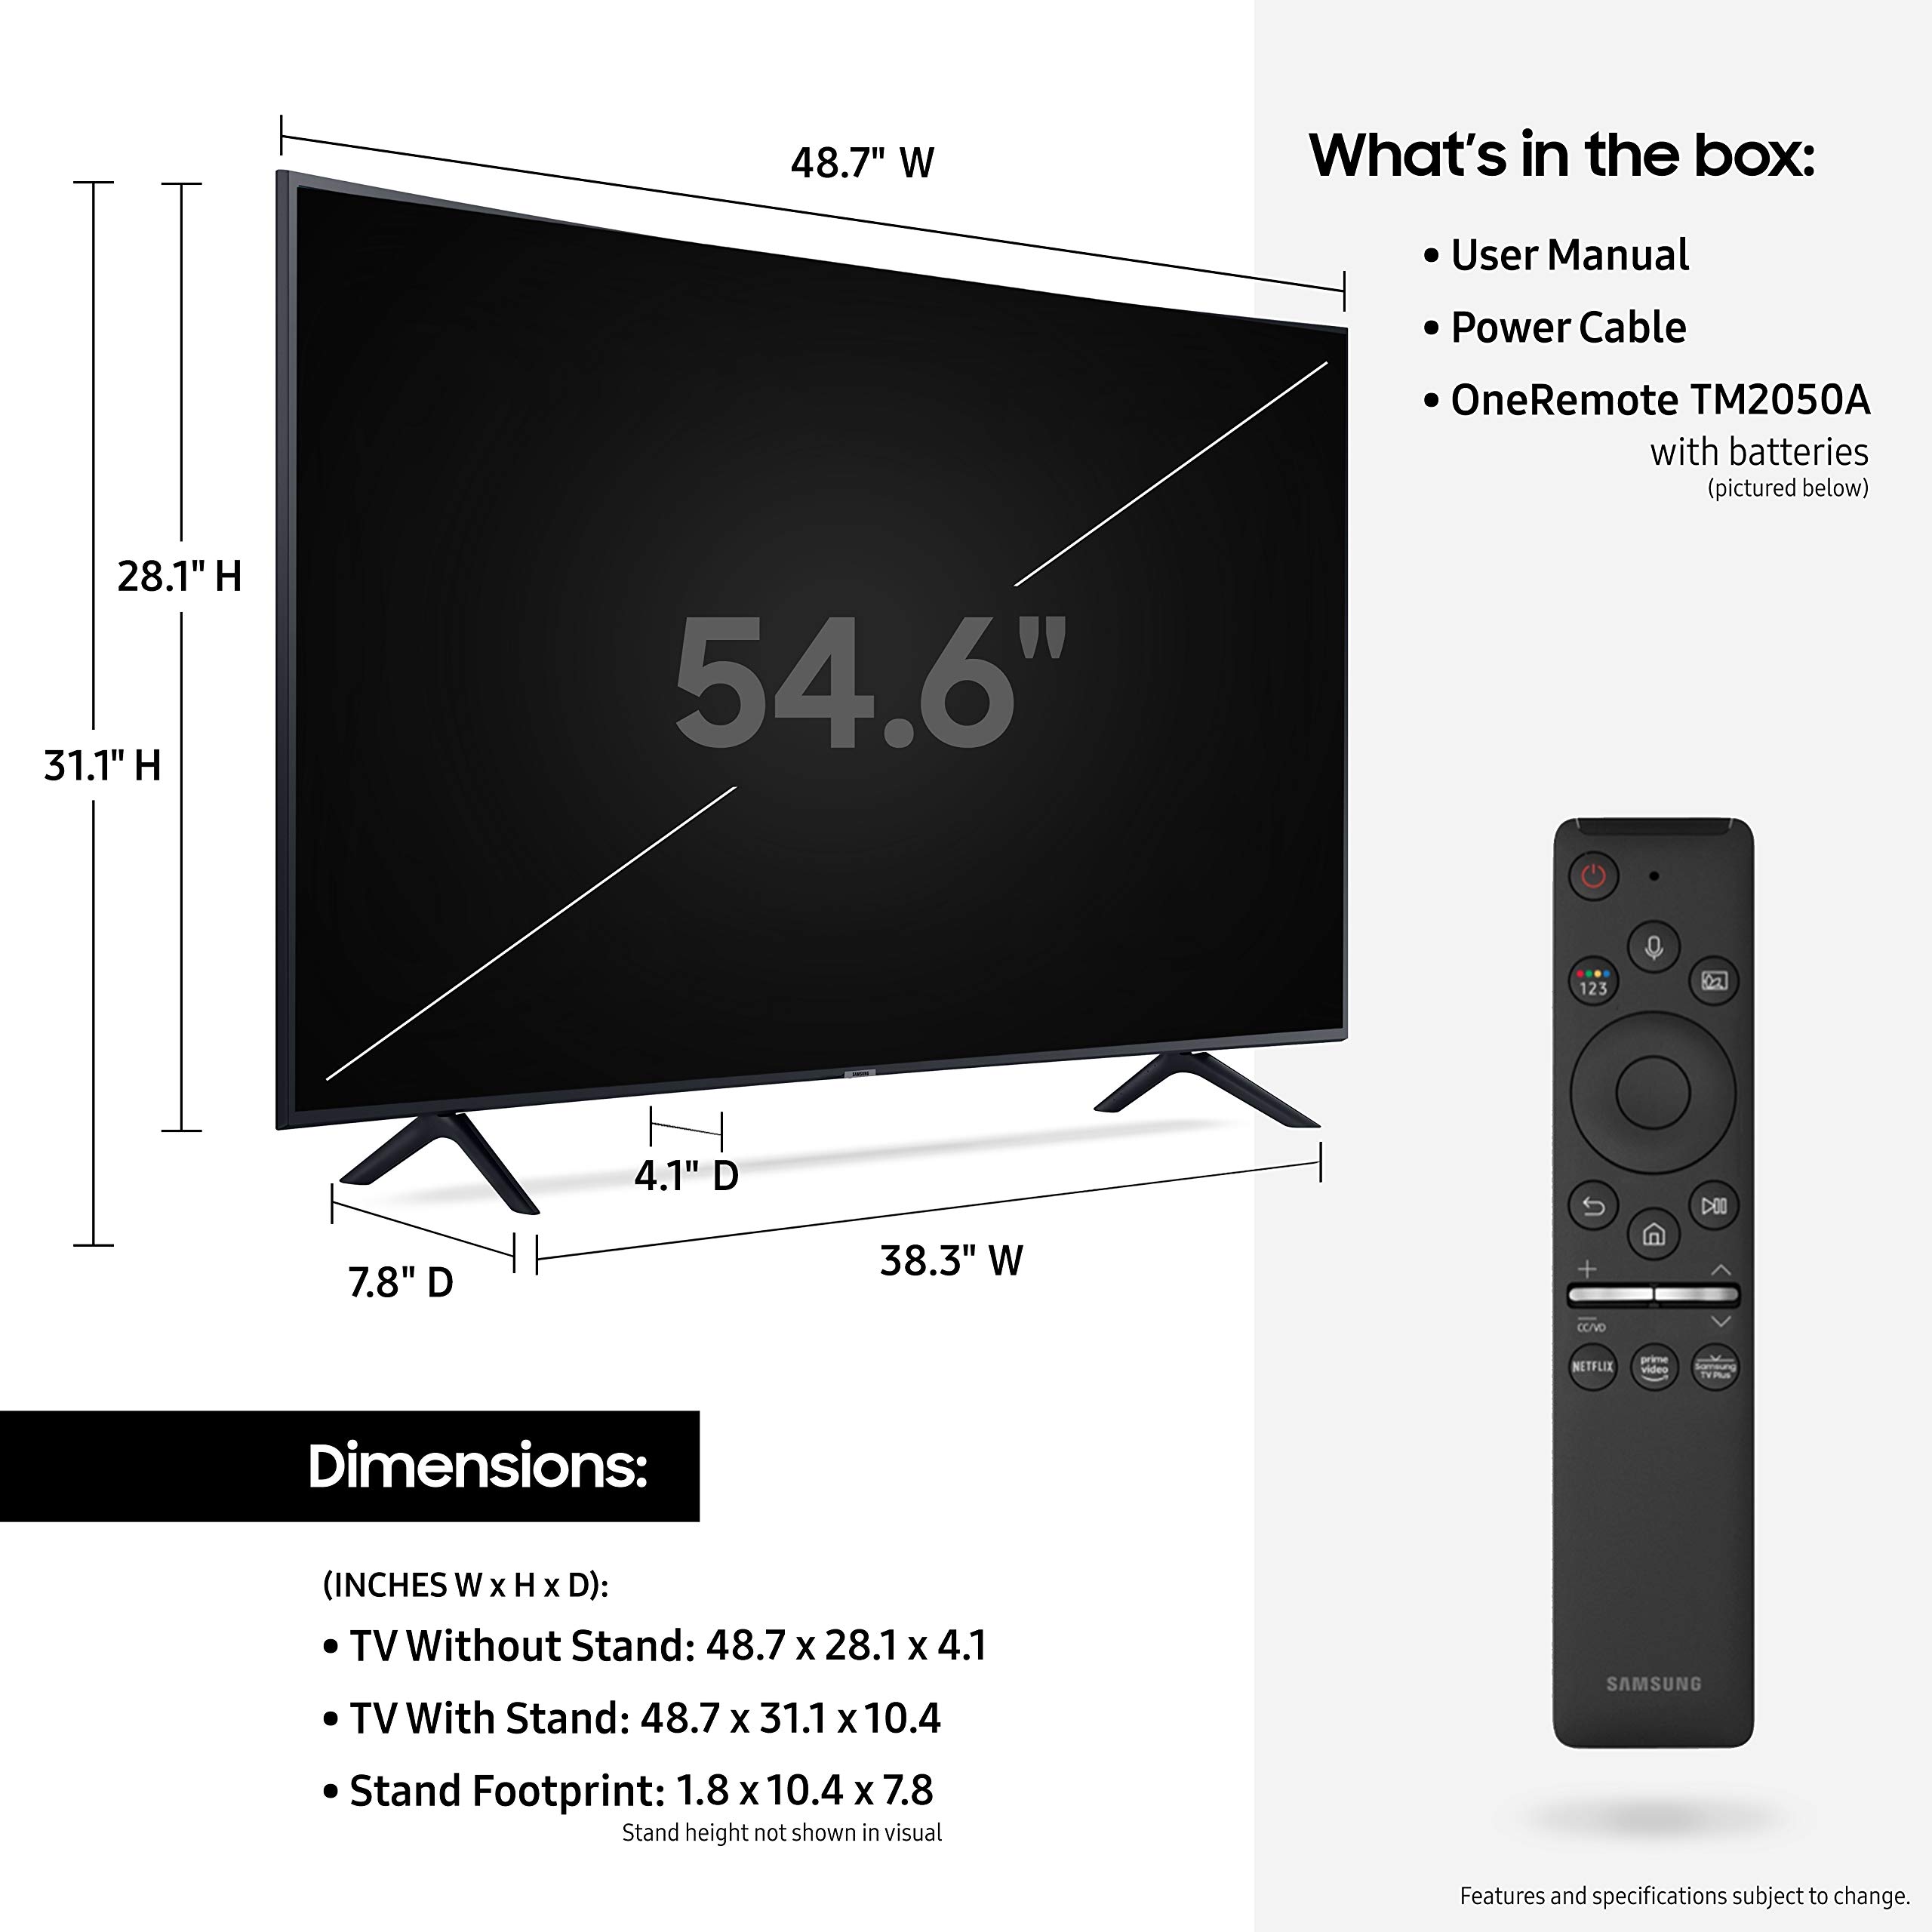 SAMSUNG 55-inch Class Curved UHD TU-8300 Series - 4K UHD HDR Smart TV With Alexa Built-in (UN55TU8300FXZA, 2020 Model), CHARCOAL BLACK